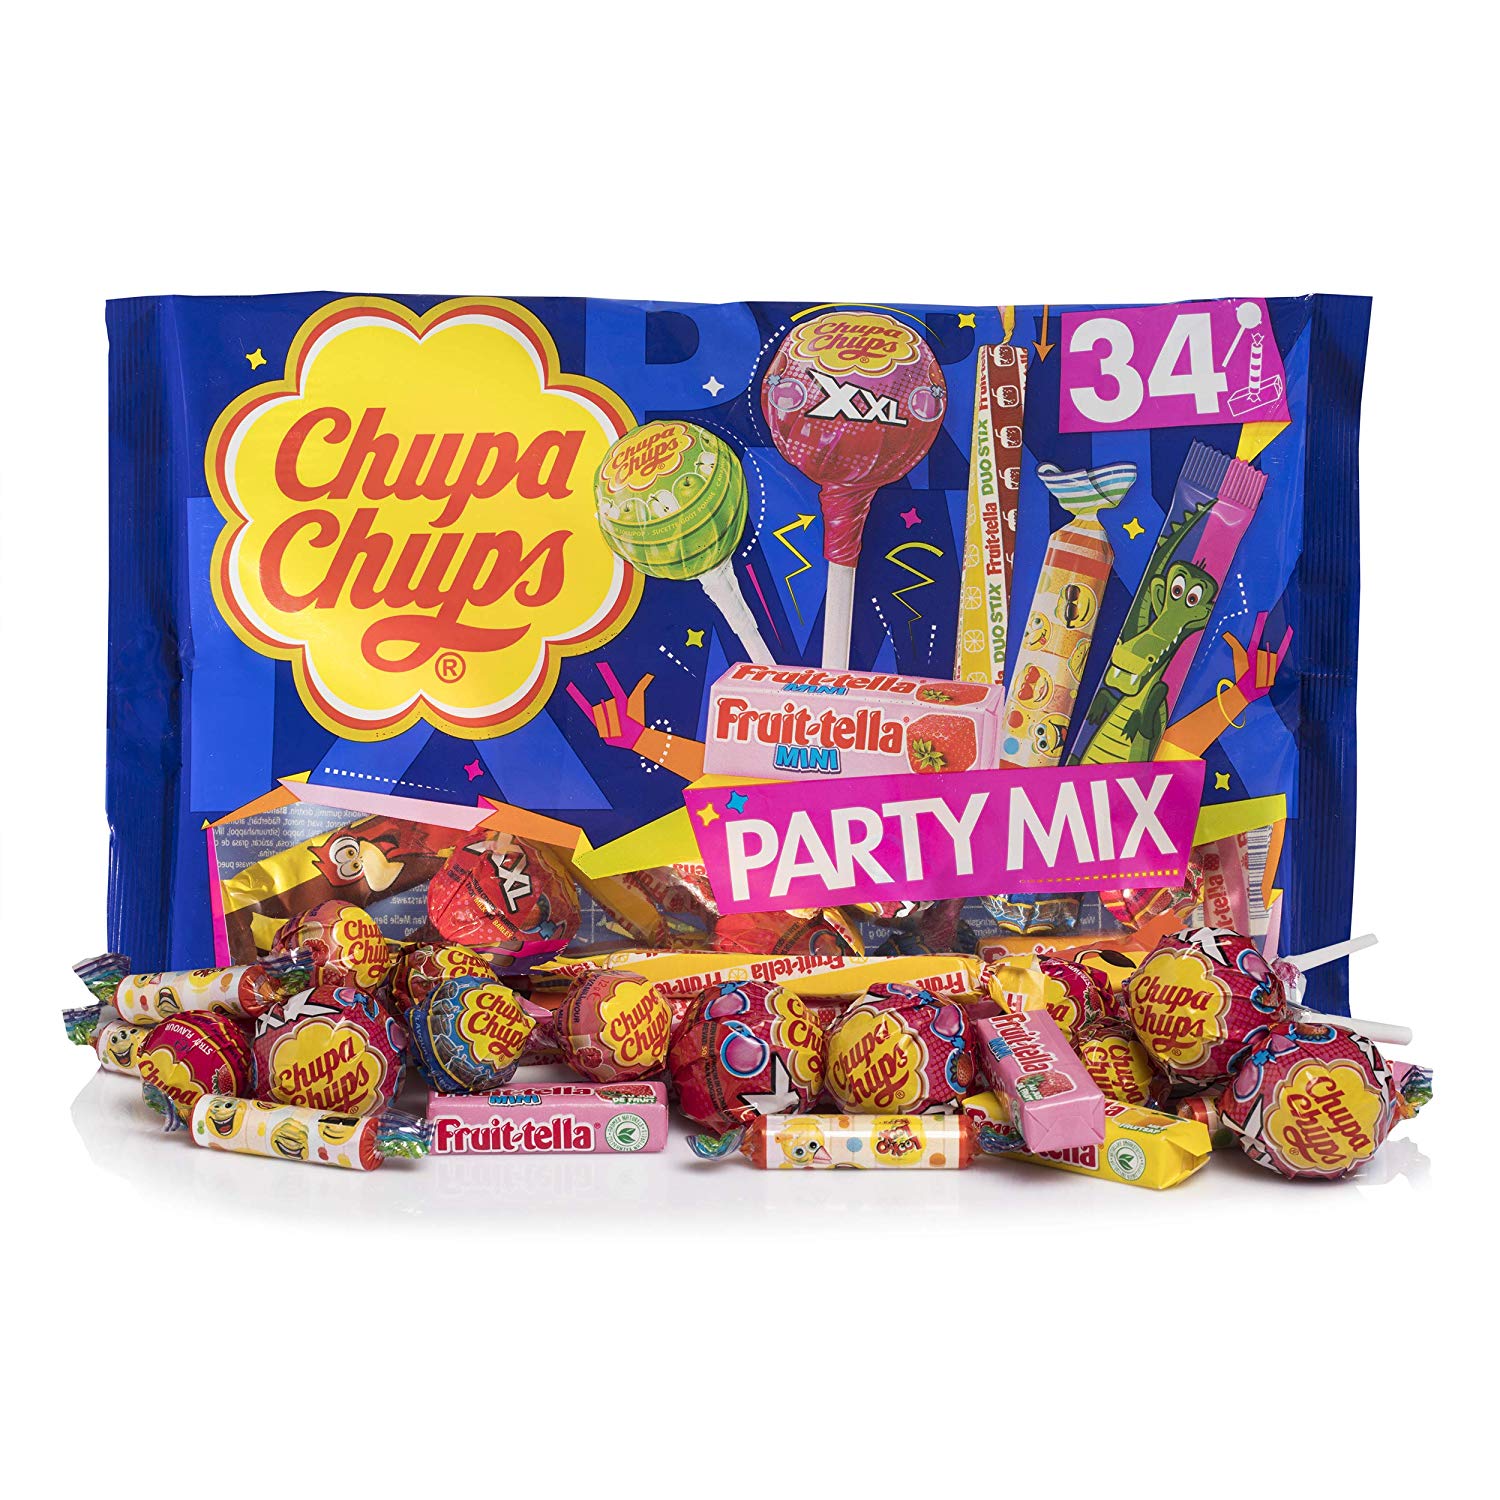 Chupa Chups Party Mix solo 3,2€